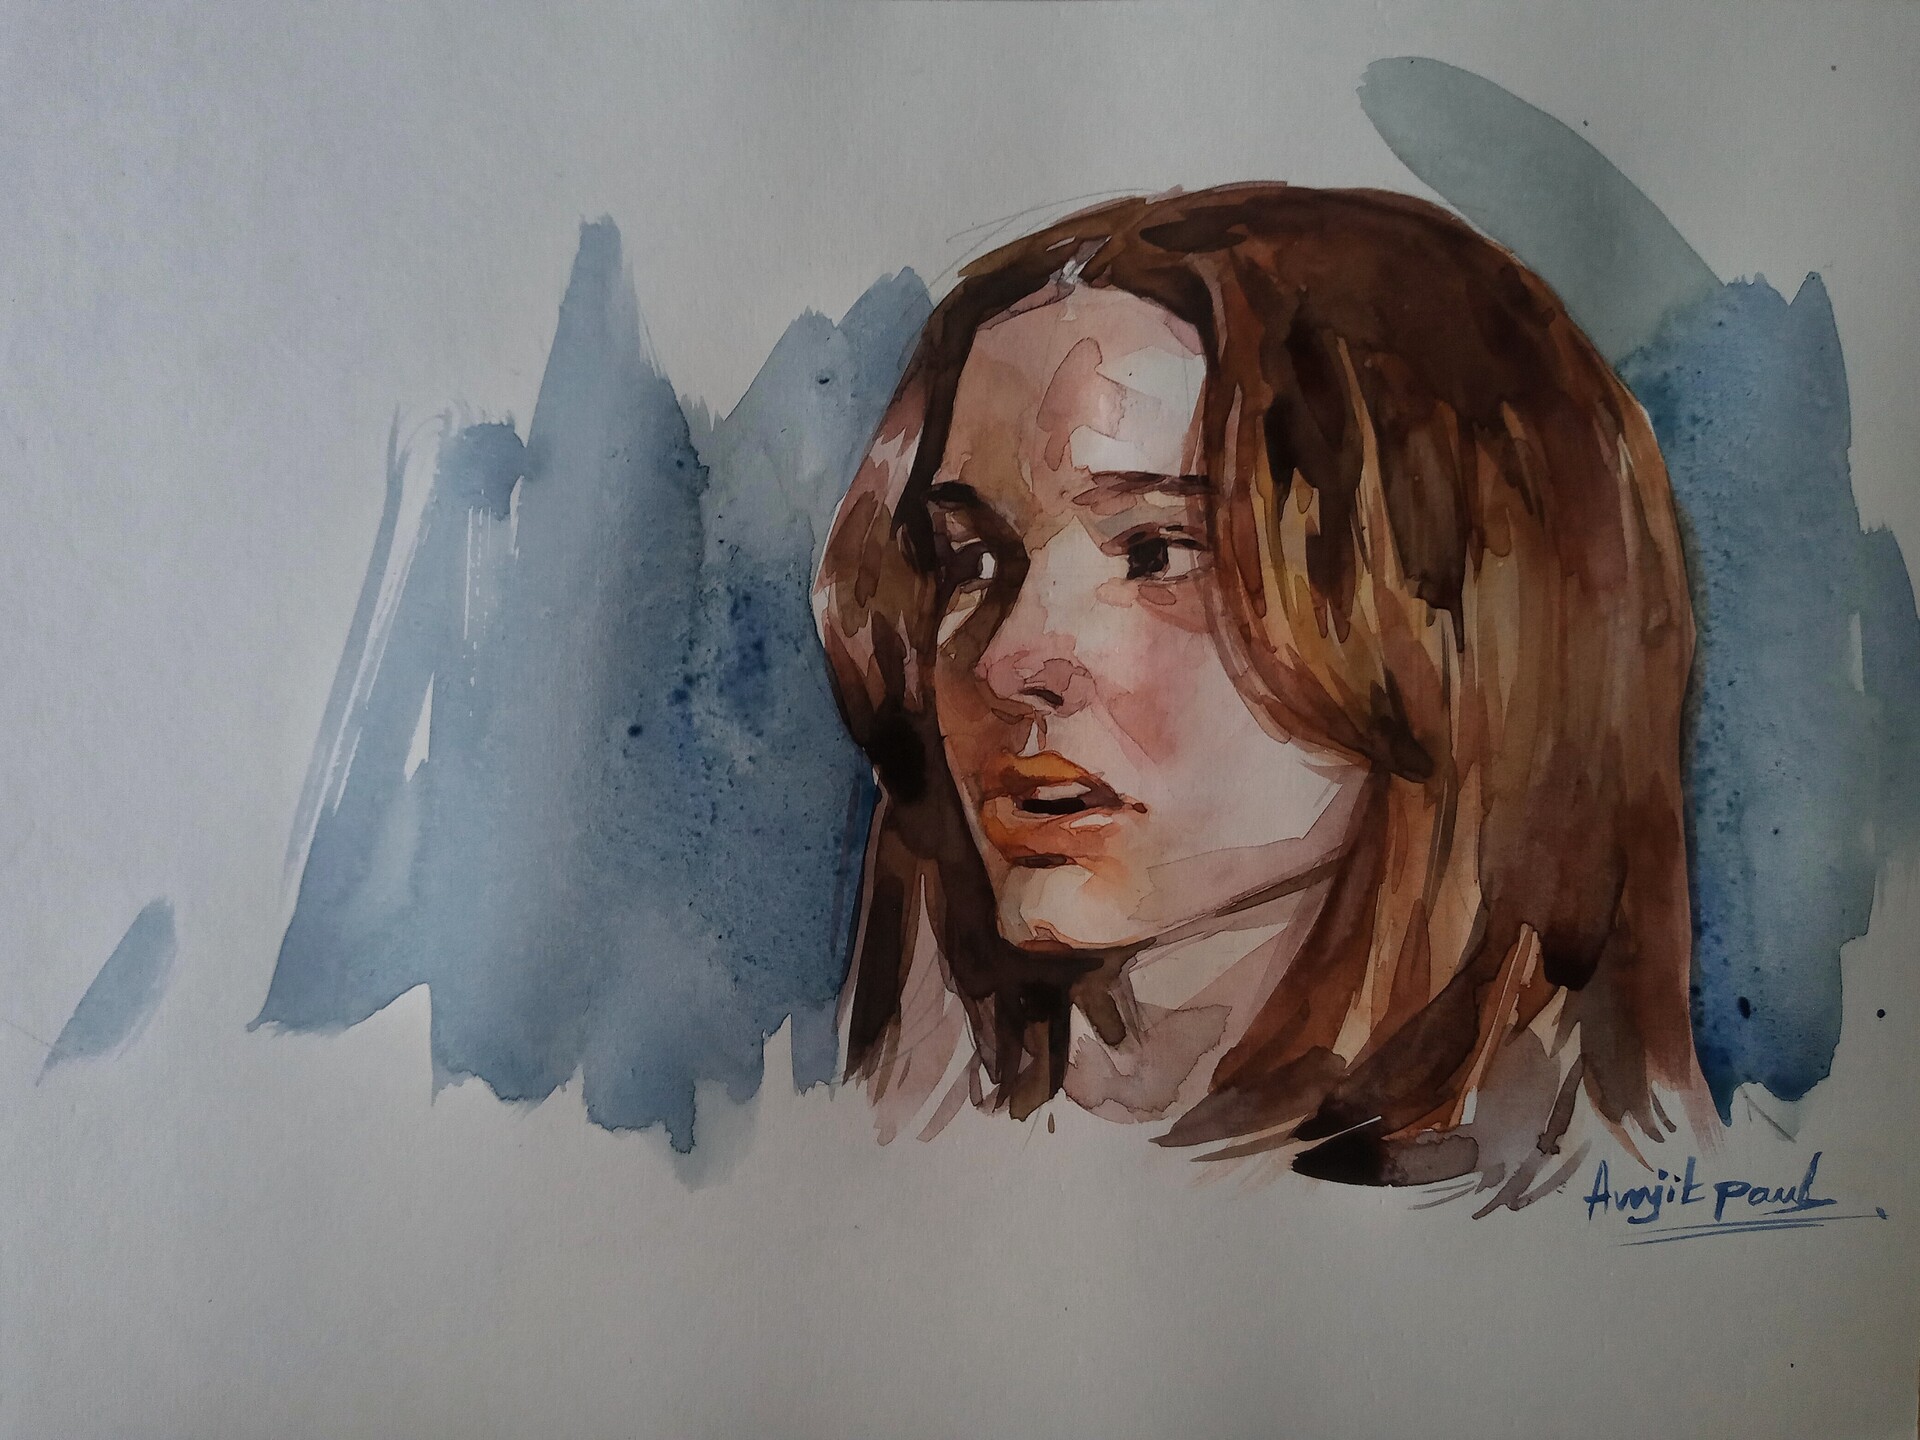 ArtStation - Watercolor on paper